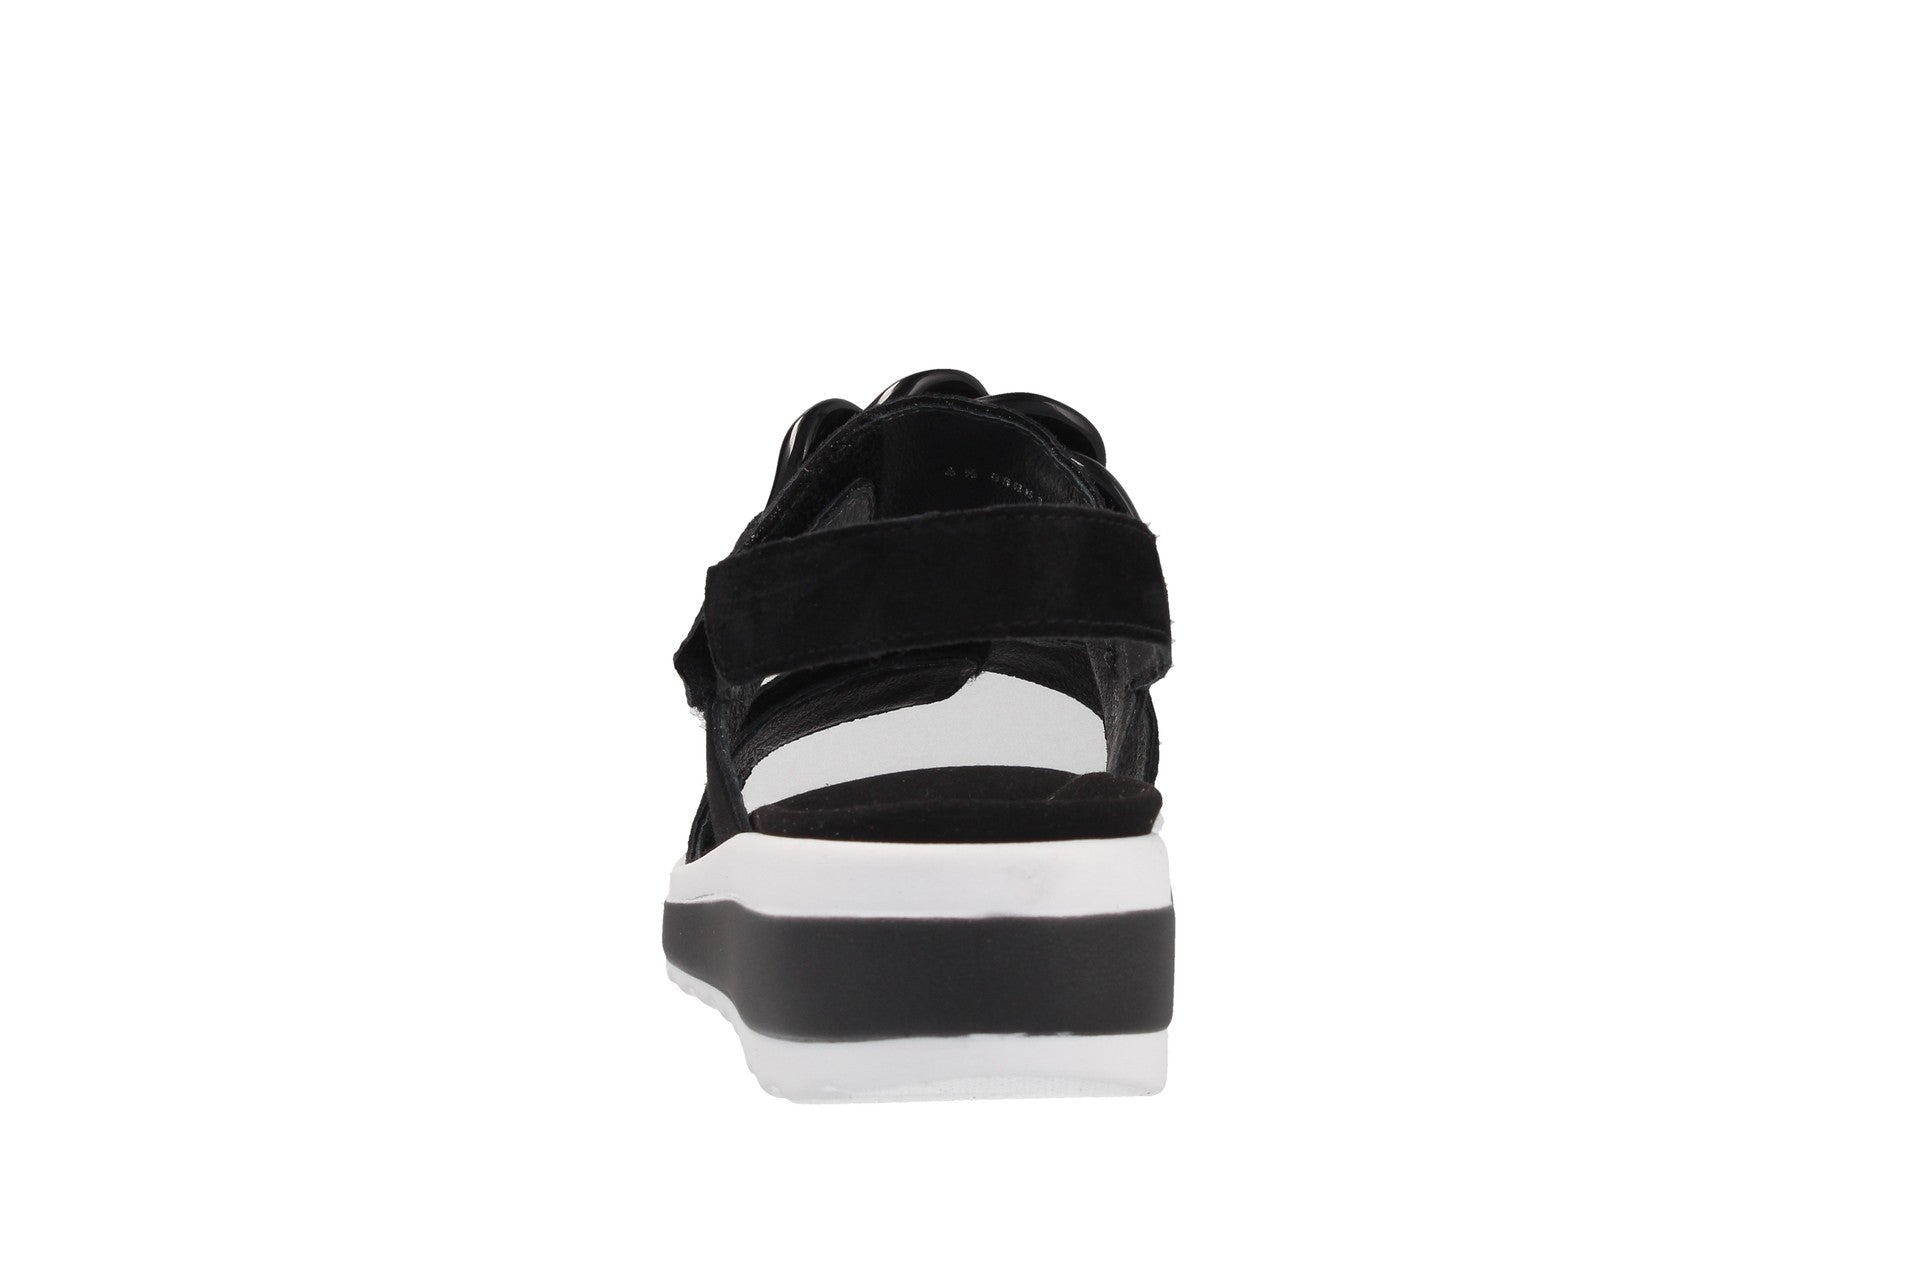 Hanna – black – sandals